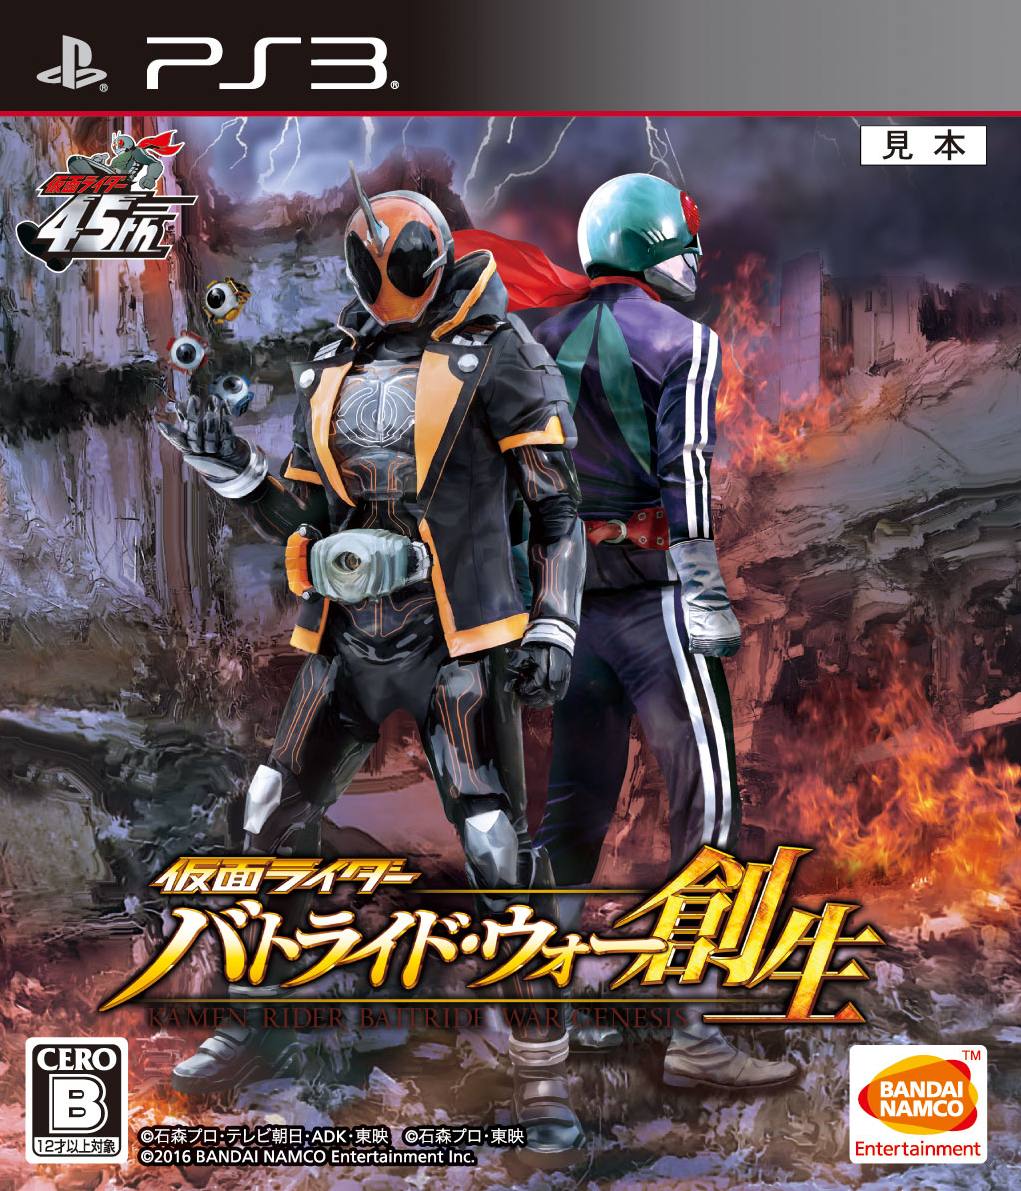 Tæt Governable Stramme Kamen Rider Battride War Sousei for PlayStation 3